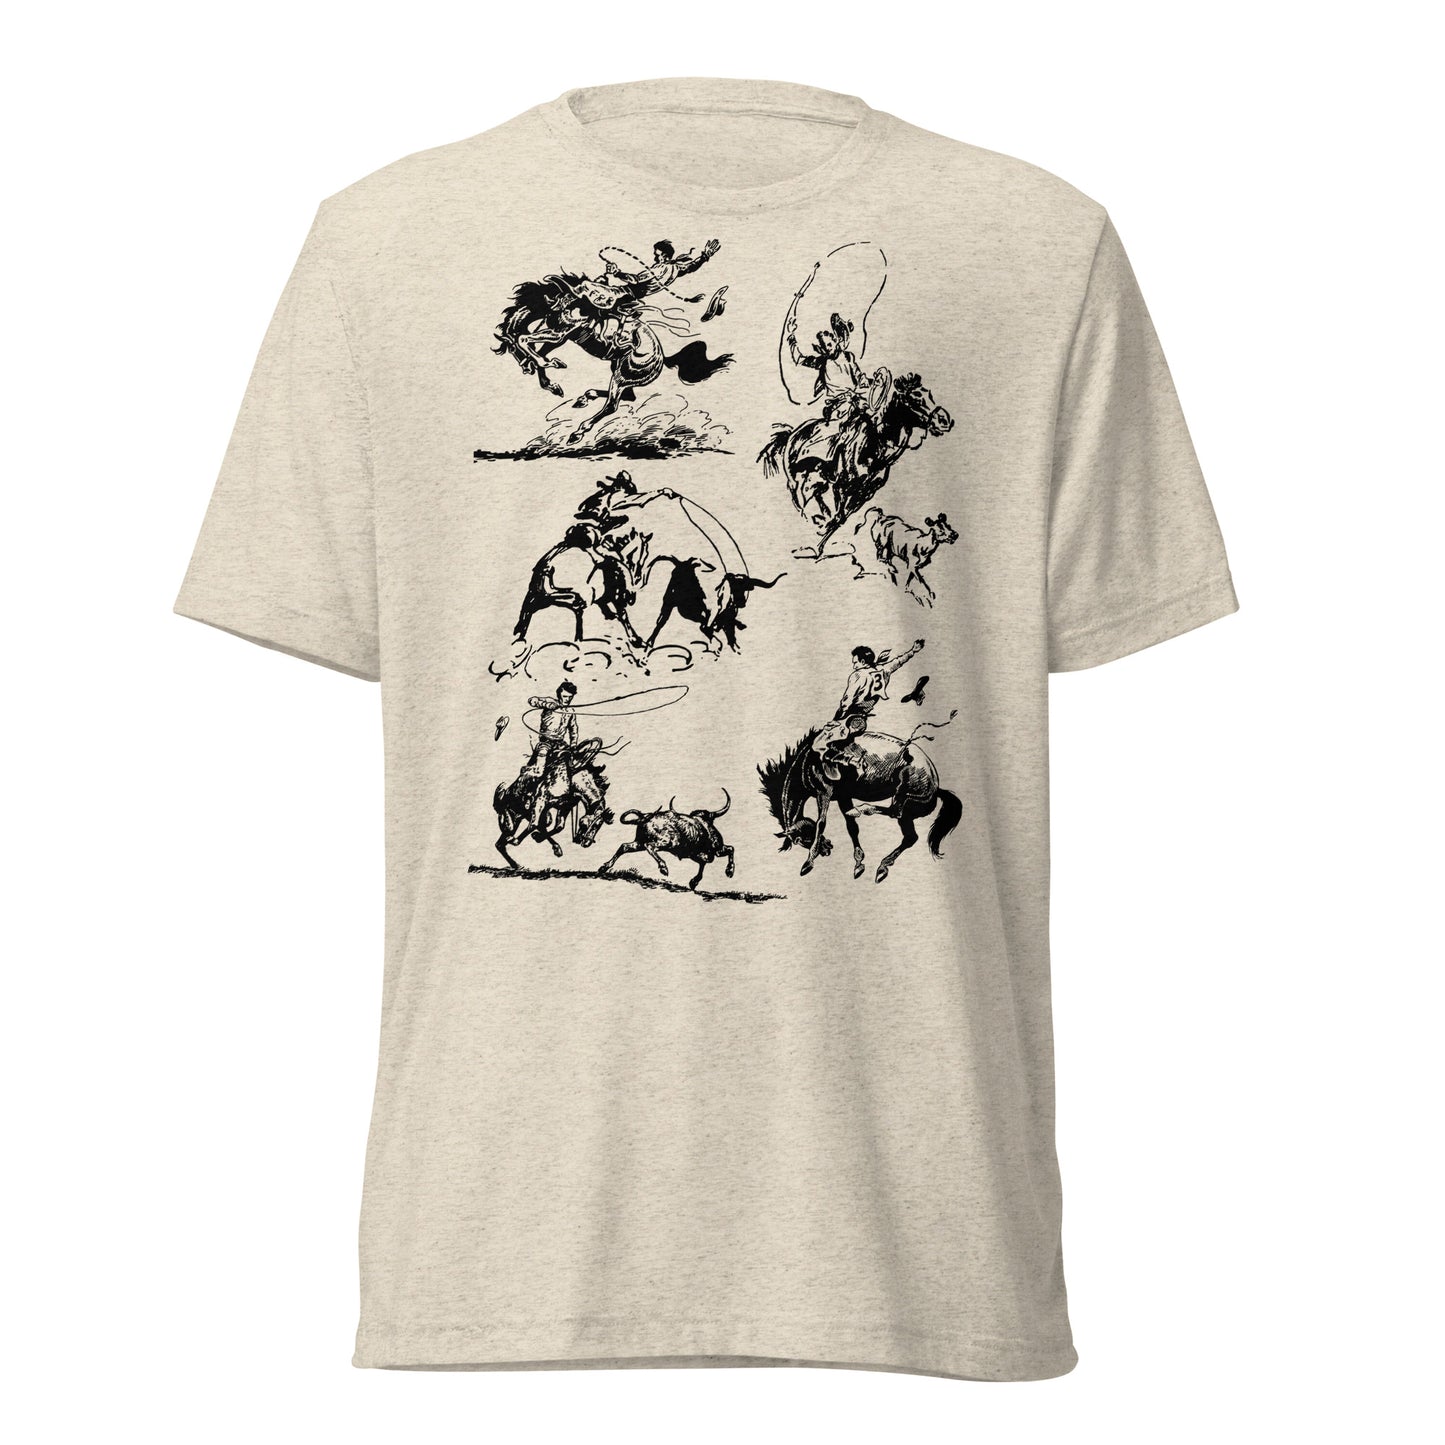 Wild West Silhouette Short sleeve t-shirt